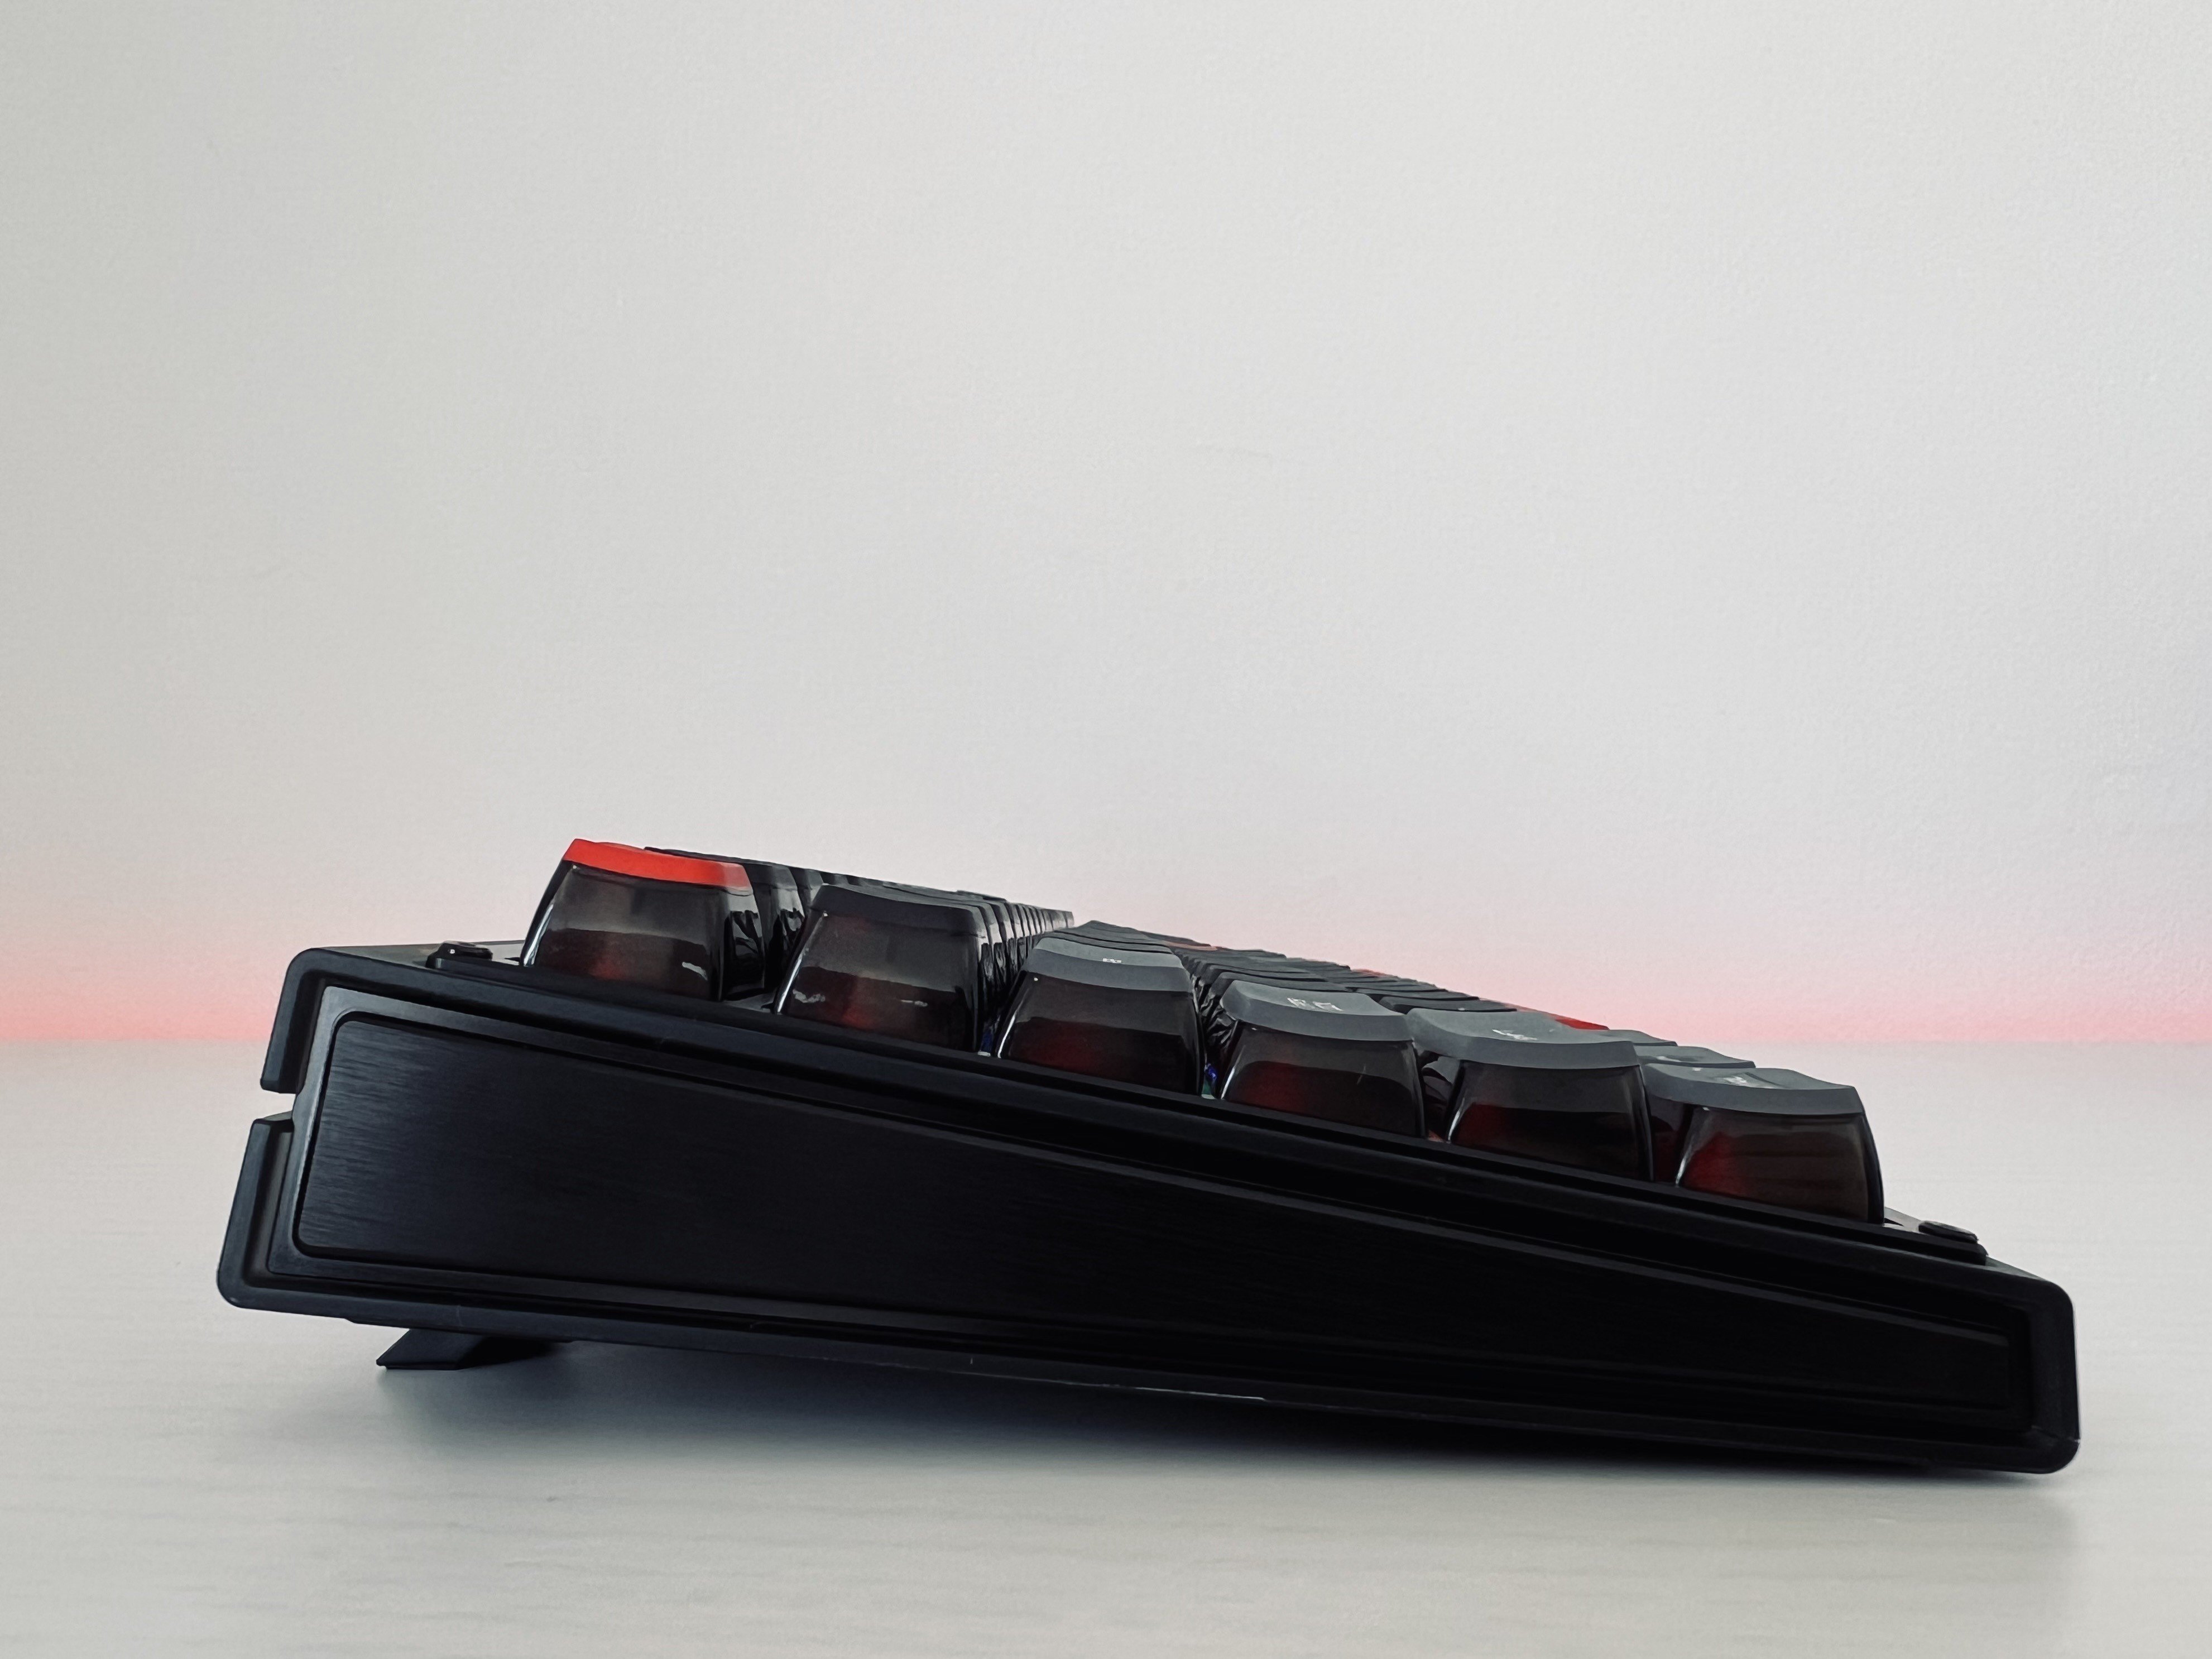 RedMagic Mechanical Gaming Keyboard